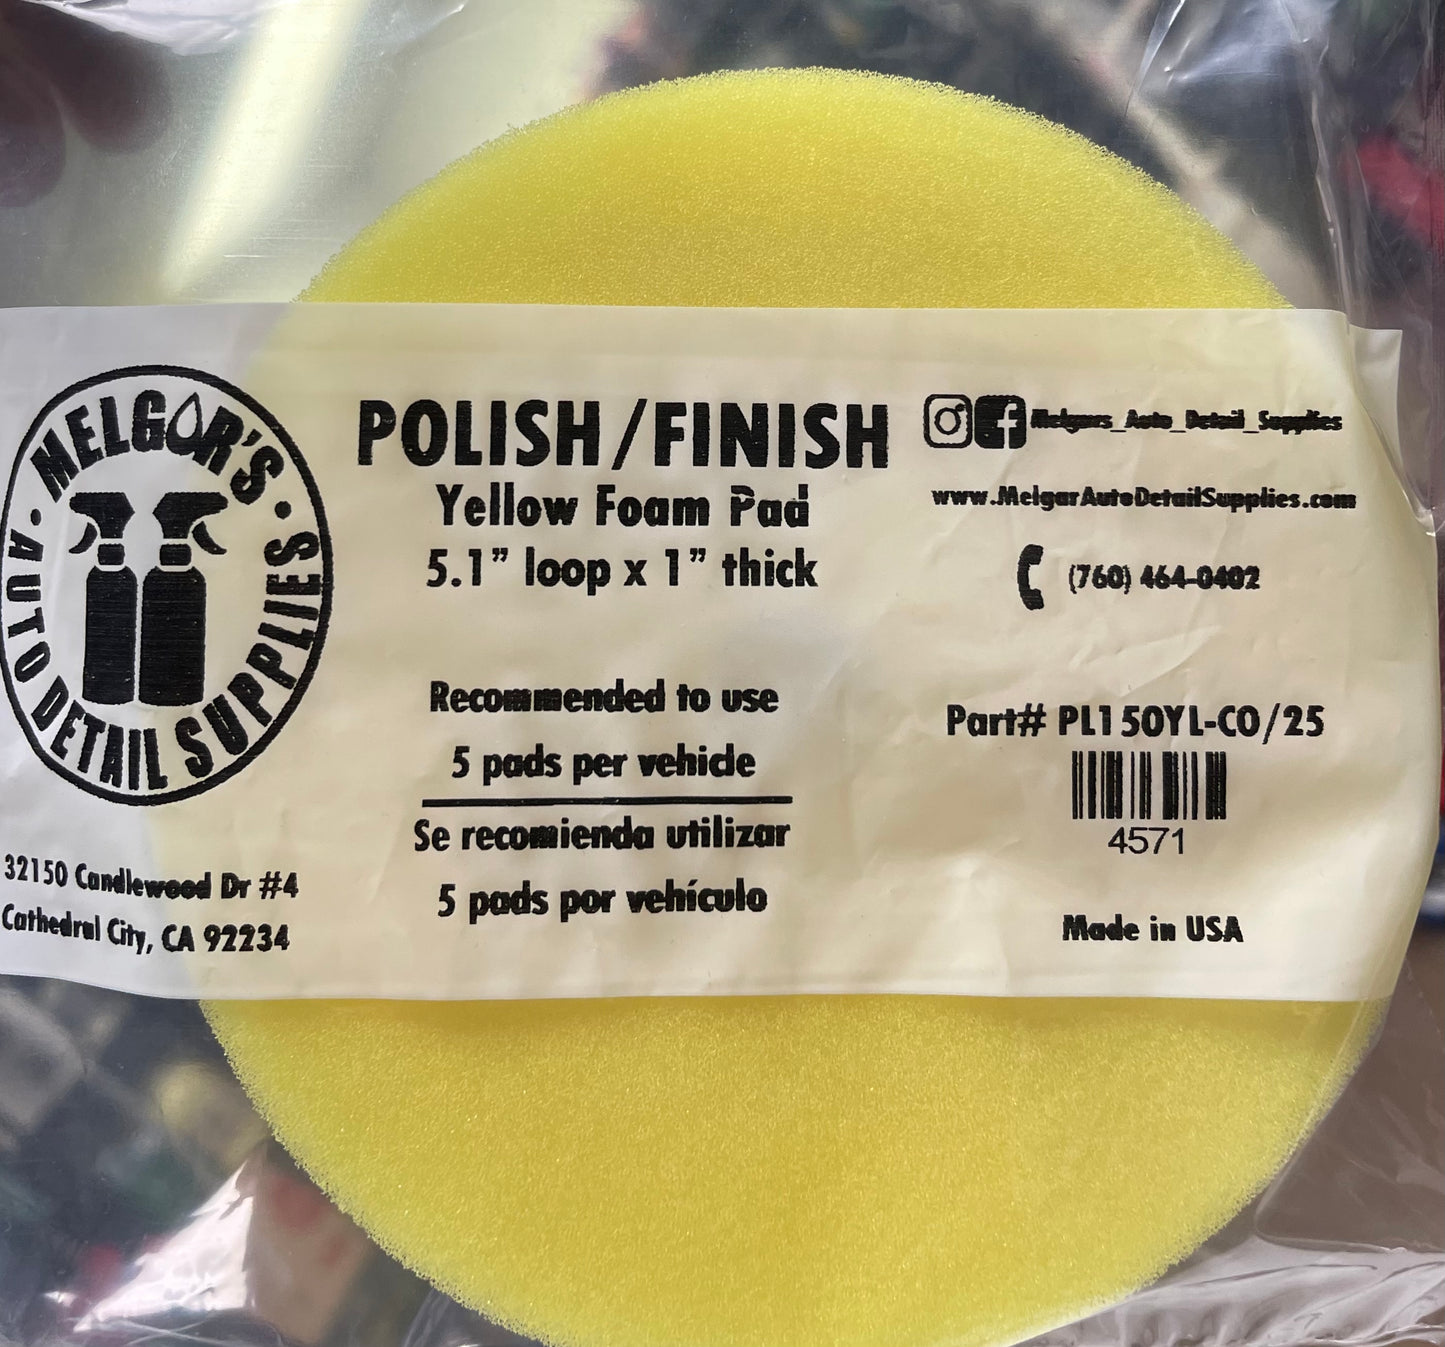 POLISH / FINISH Yellow Foam Pad 5.1” loop x 1” thick